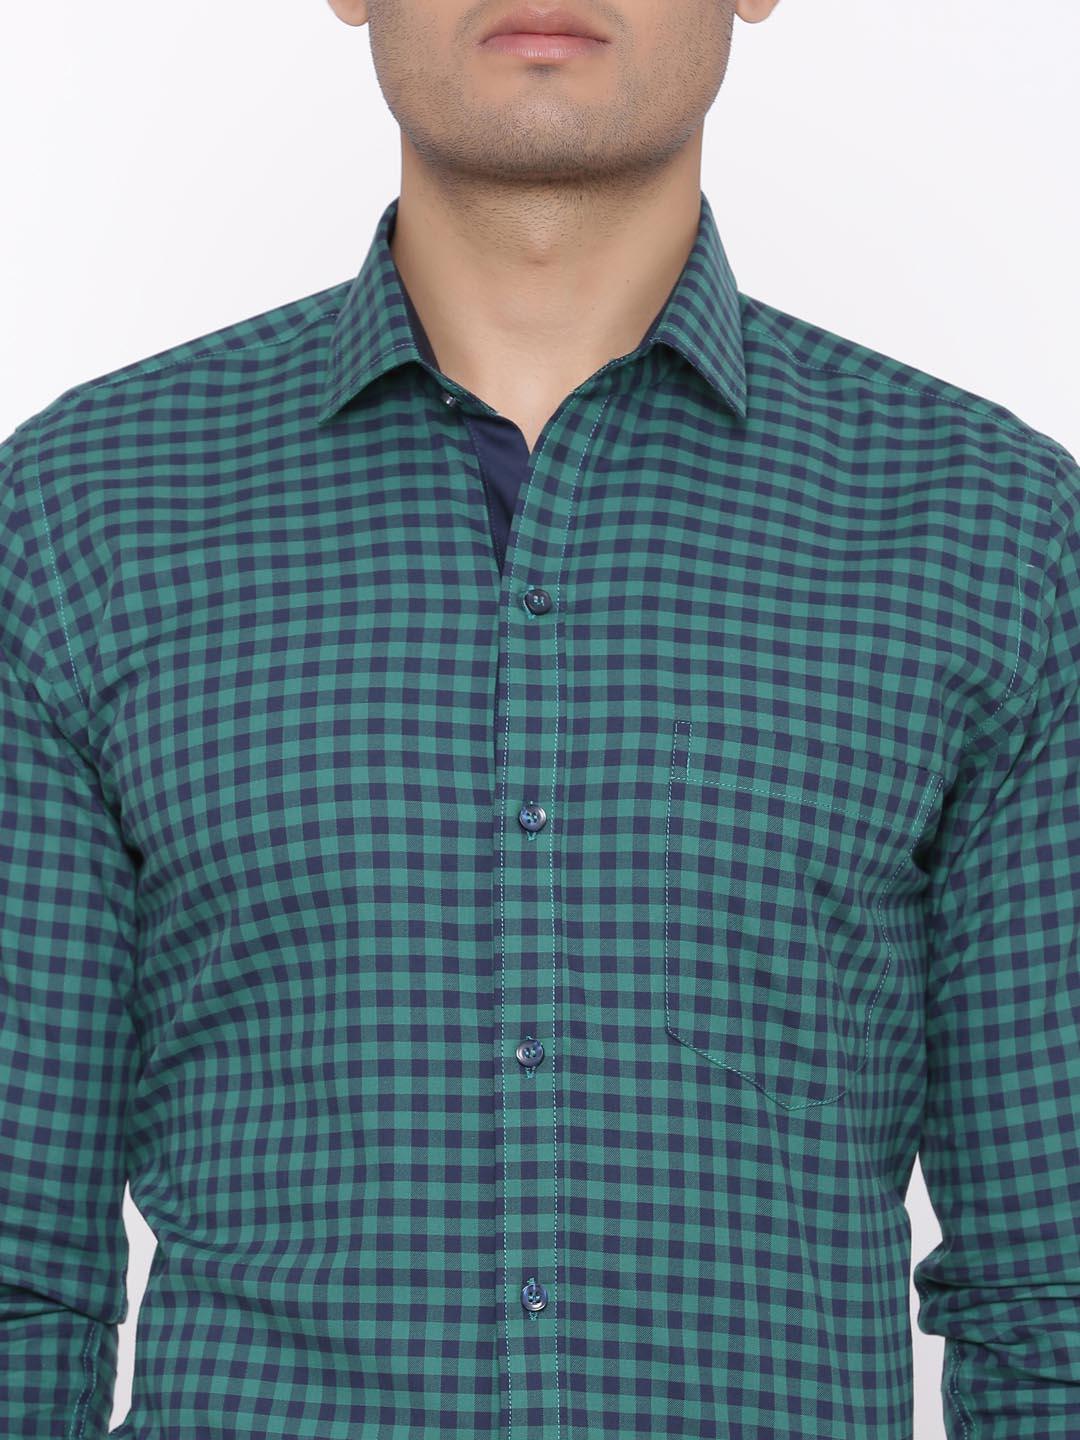 Green Check Shirt